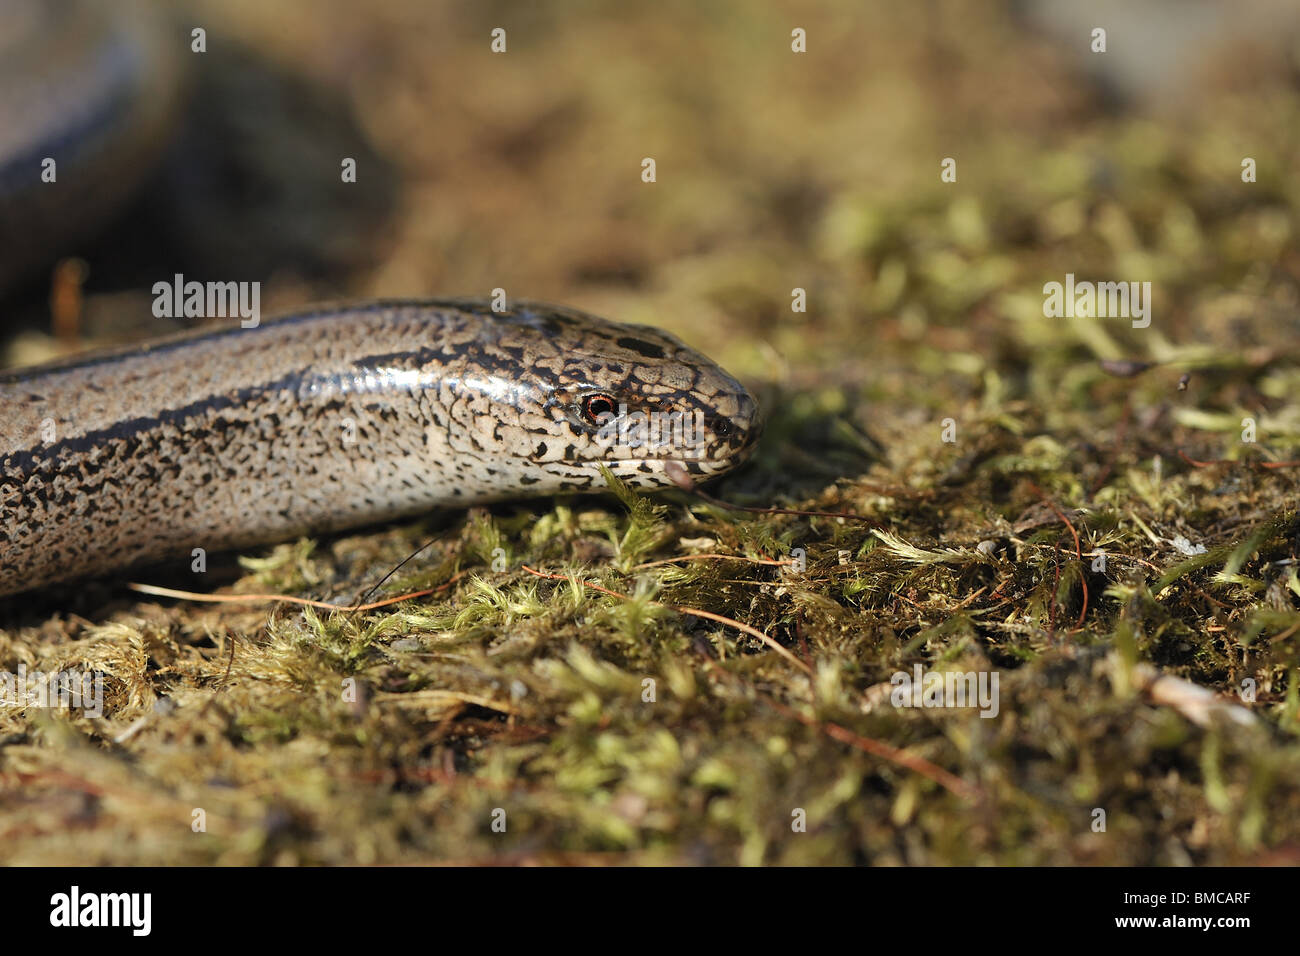 Female slow worm (Anguis fragilis) - head detail Stock Photo